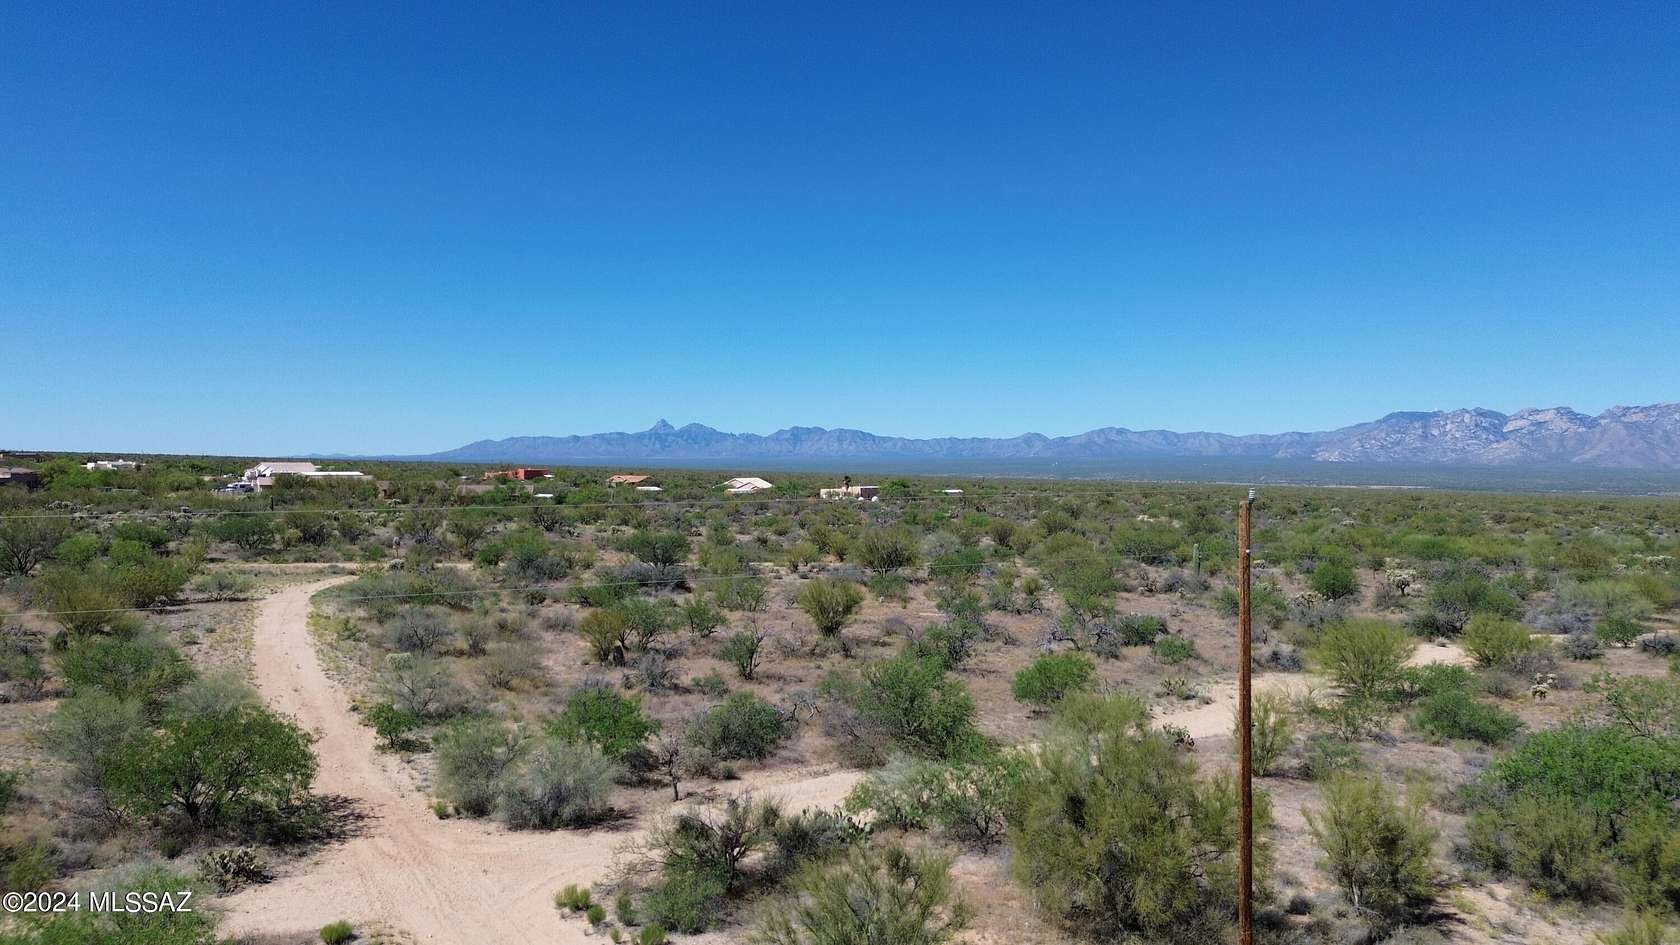 58 Acres of Land for Sale in Tucson, Arizona